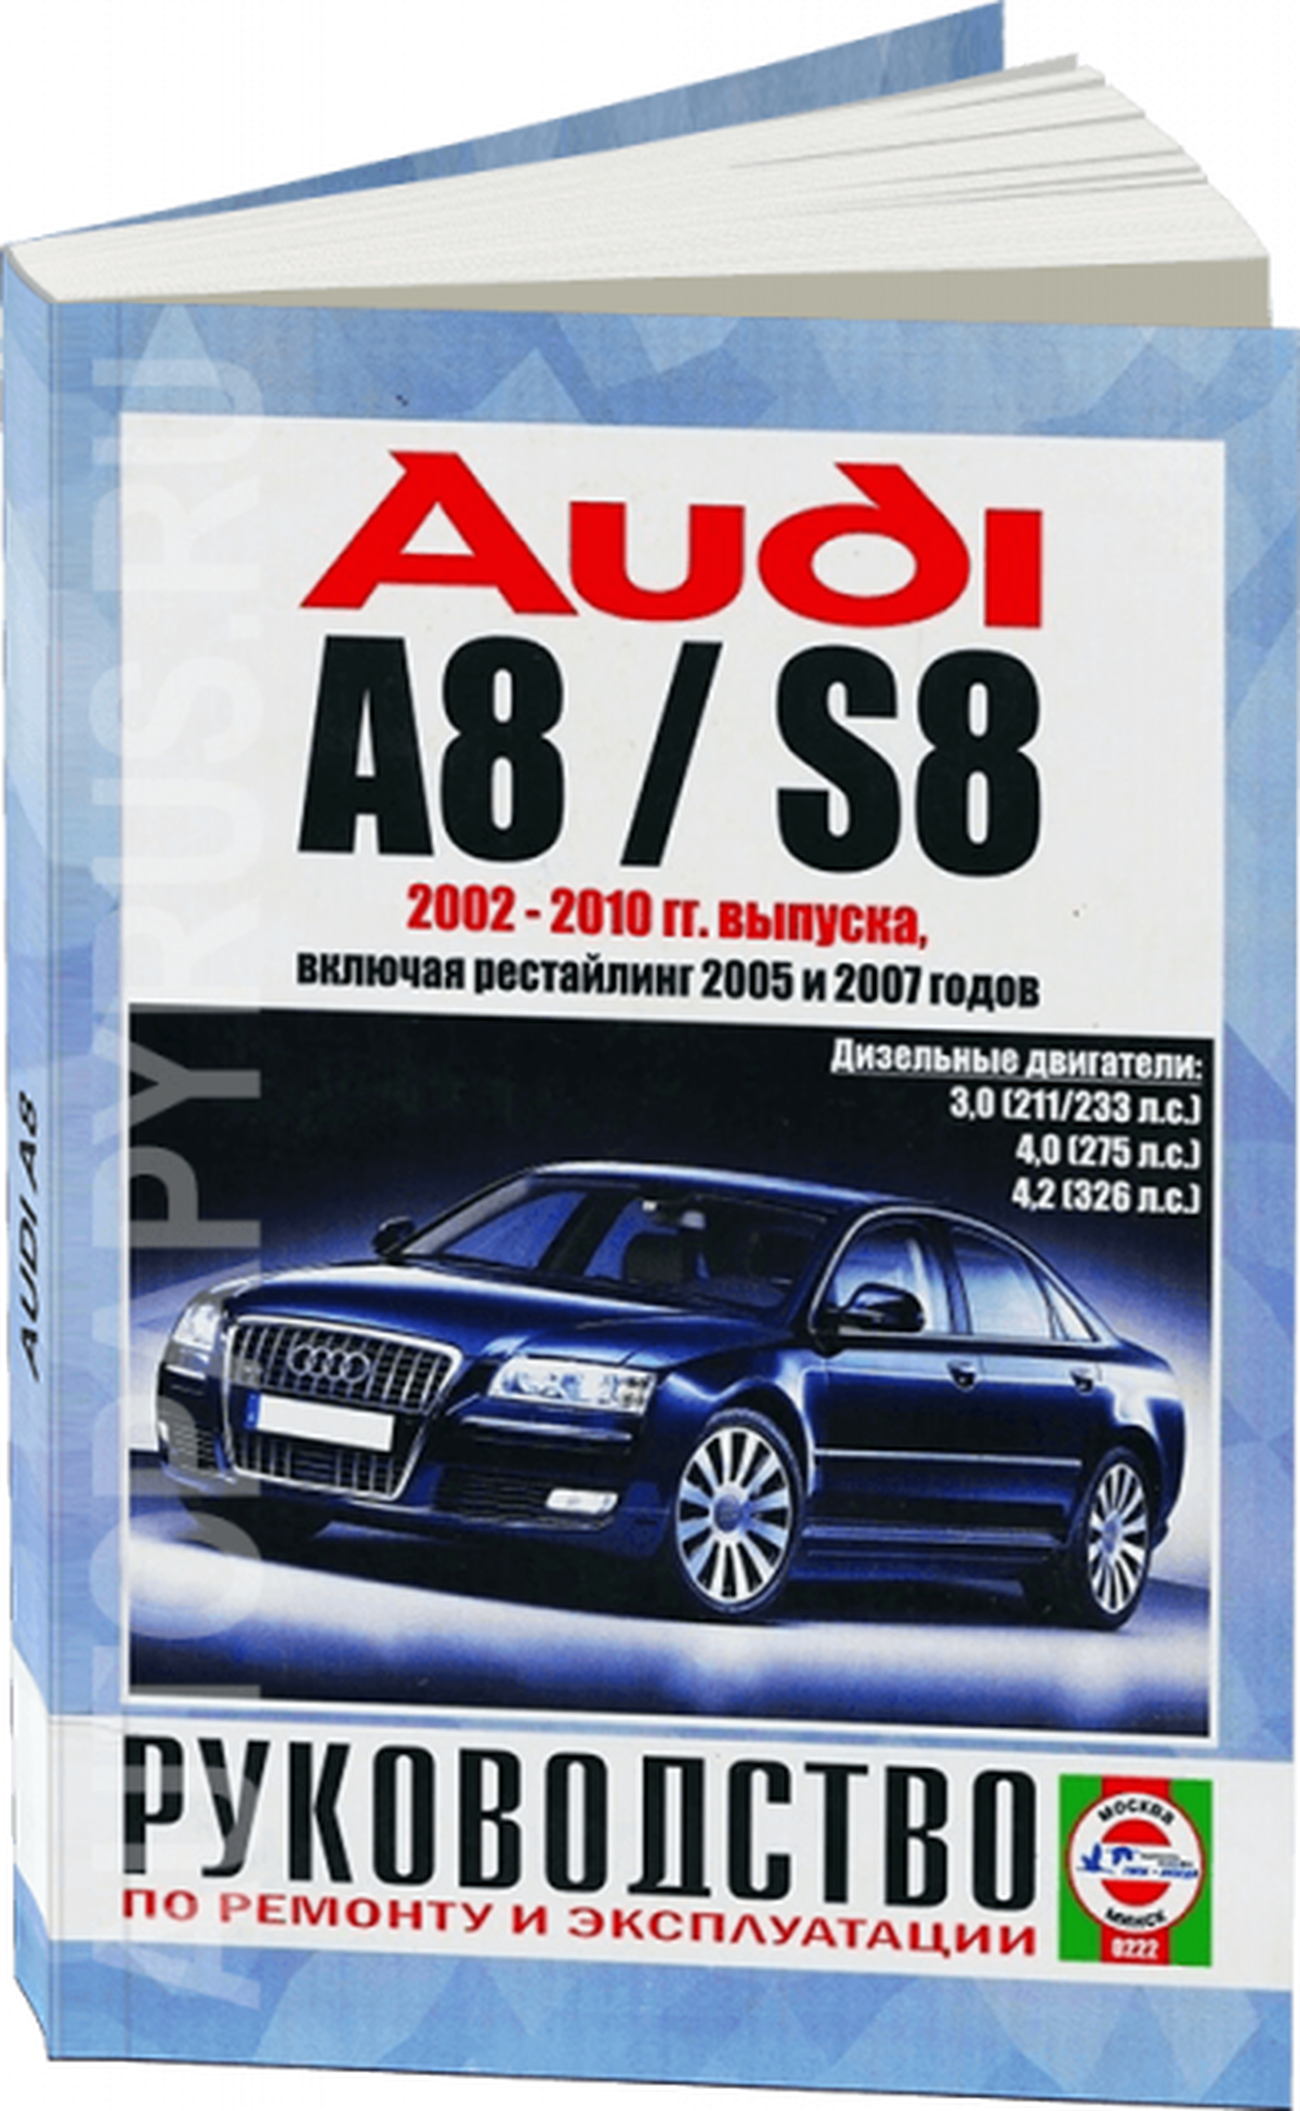 Книга: AUDI A8 / S8 (д) 2002-2010 г.в., рем., экспл., то | Чижовка